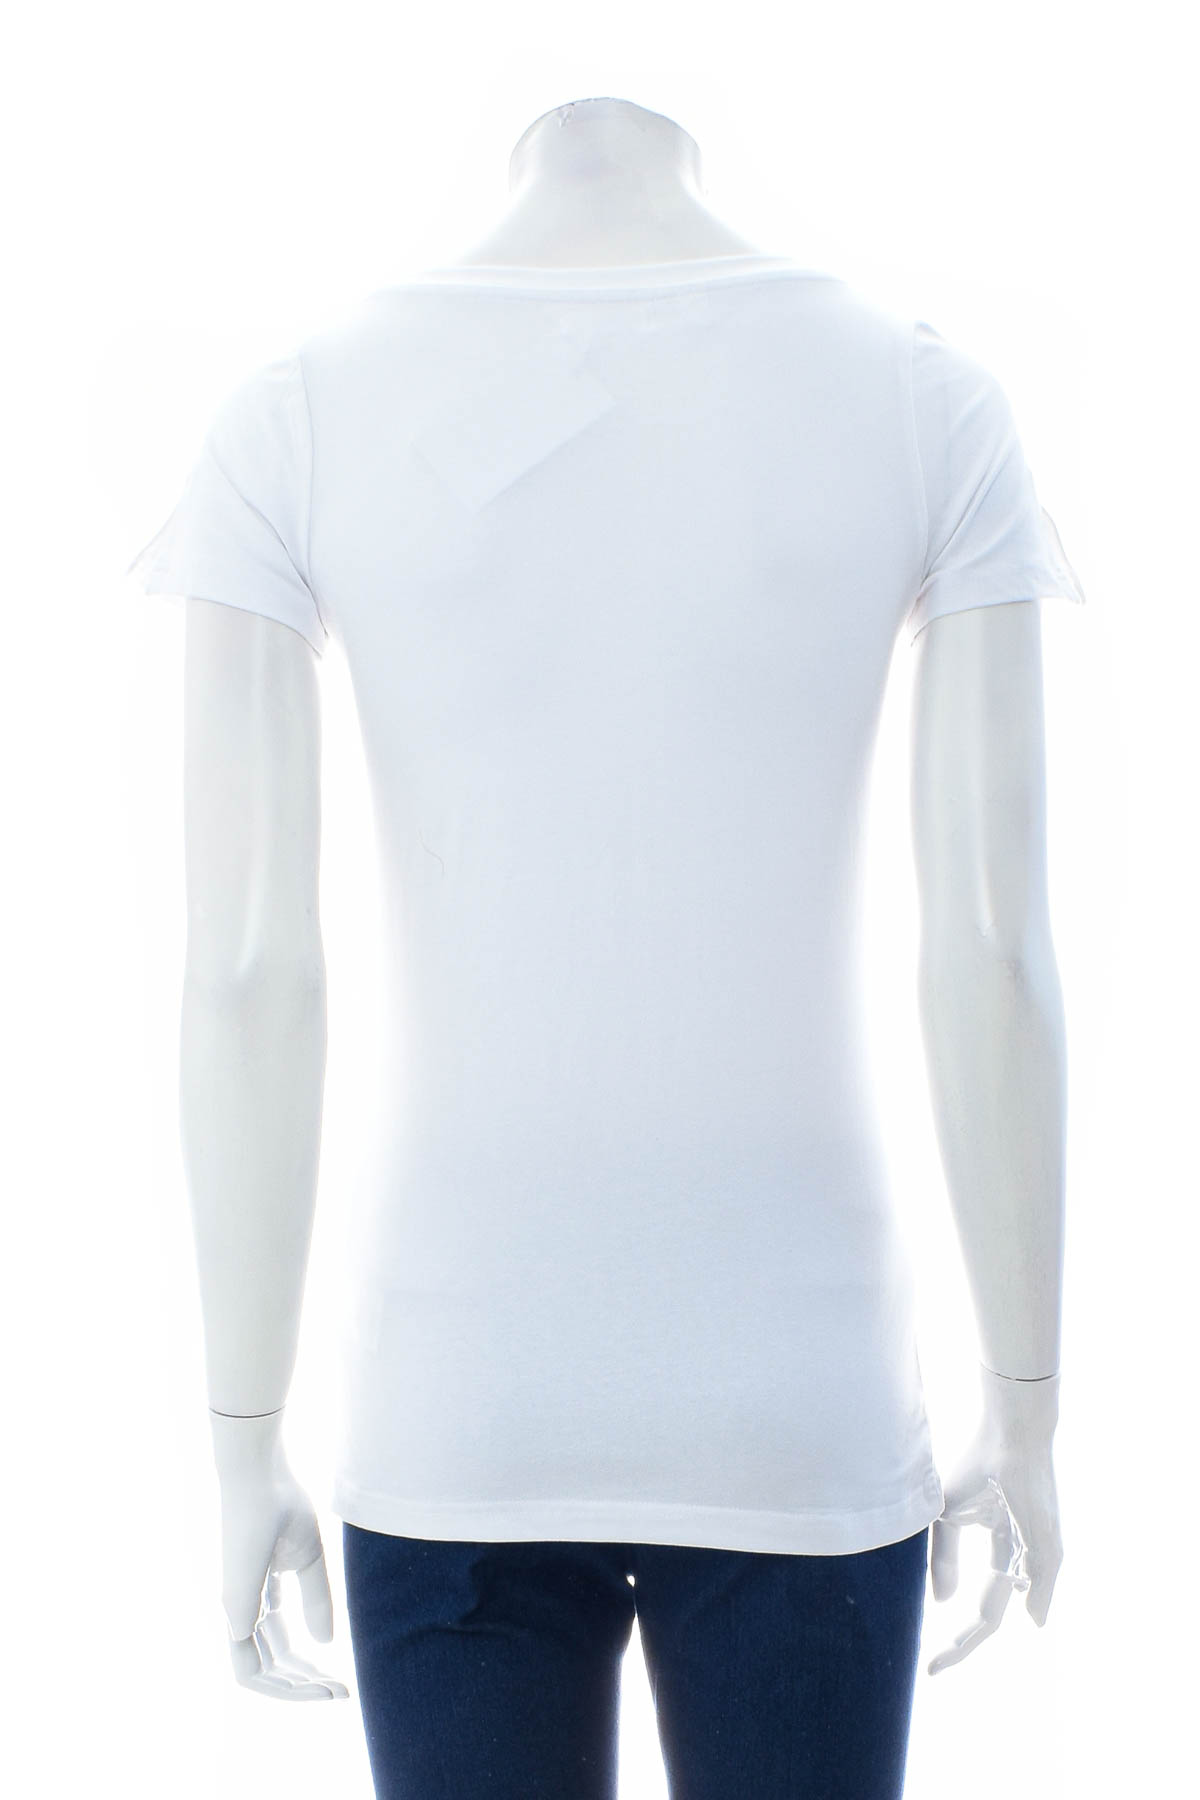 Women's t-shirt - Bpc Bonprix Collection - 1